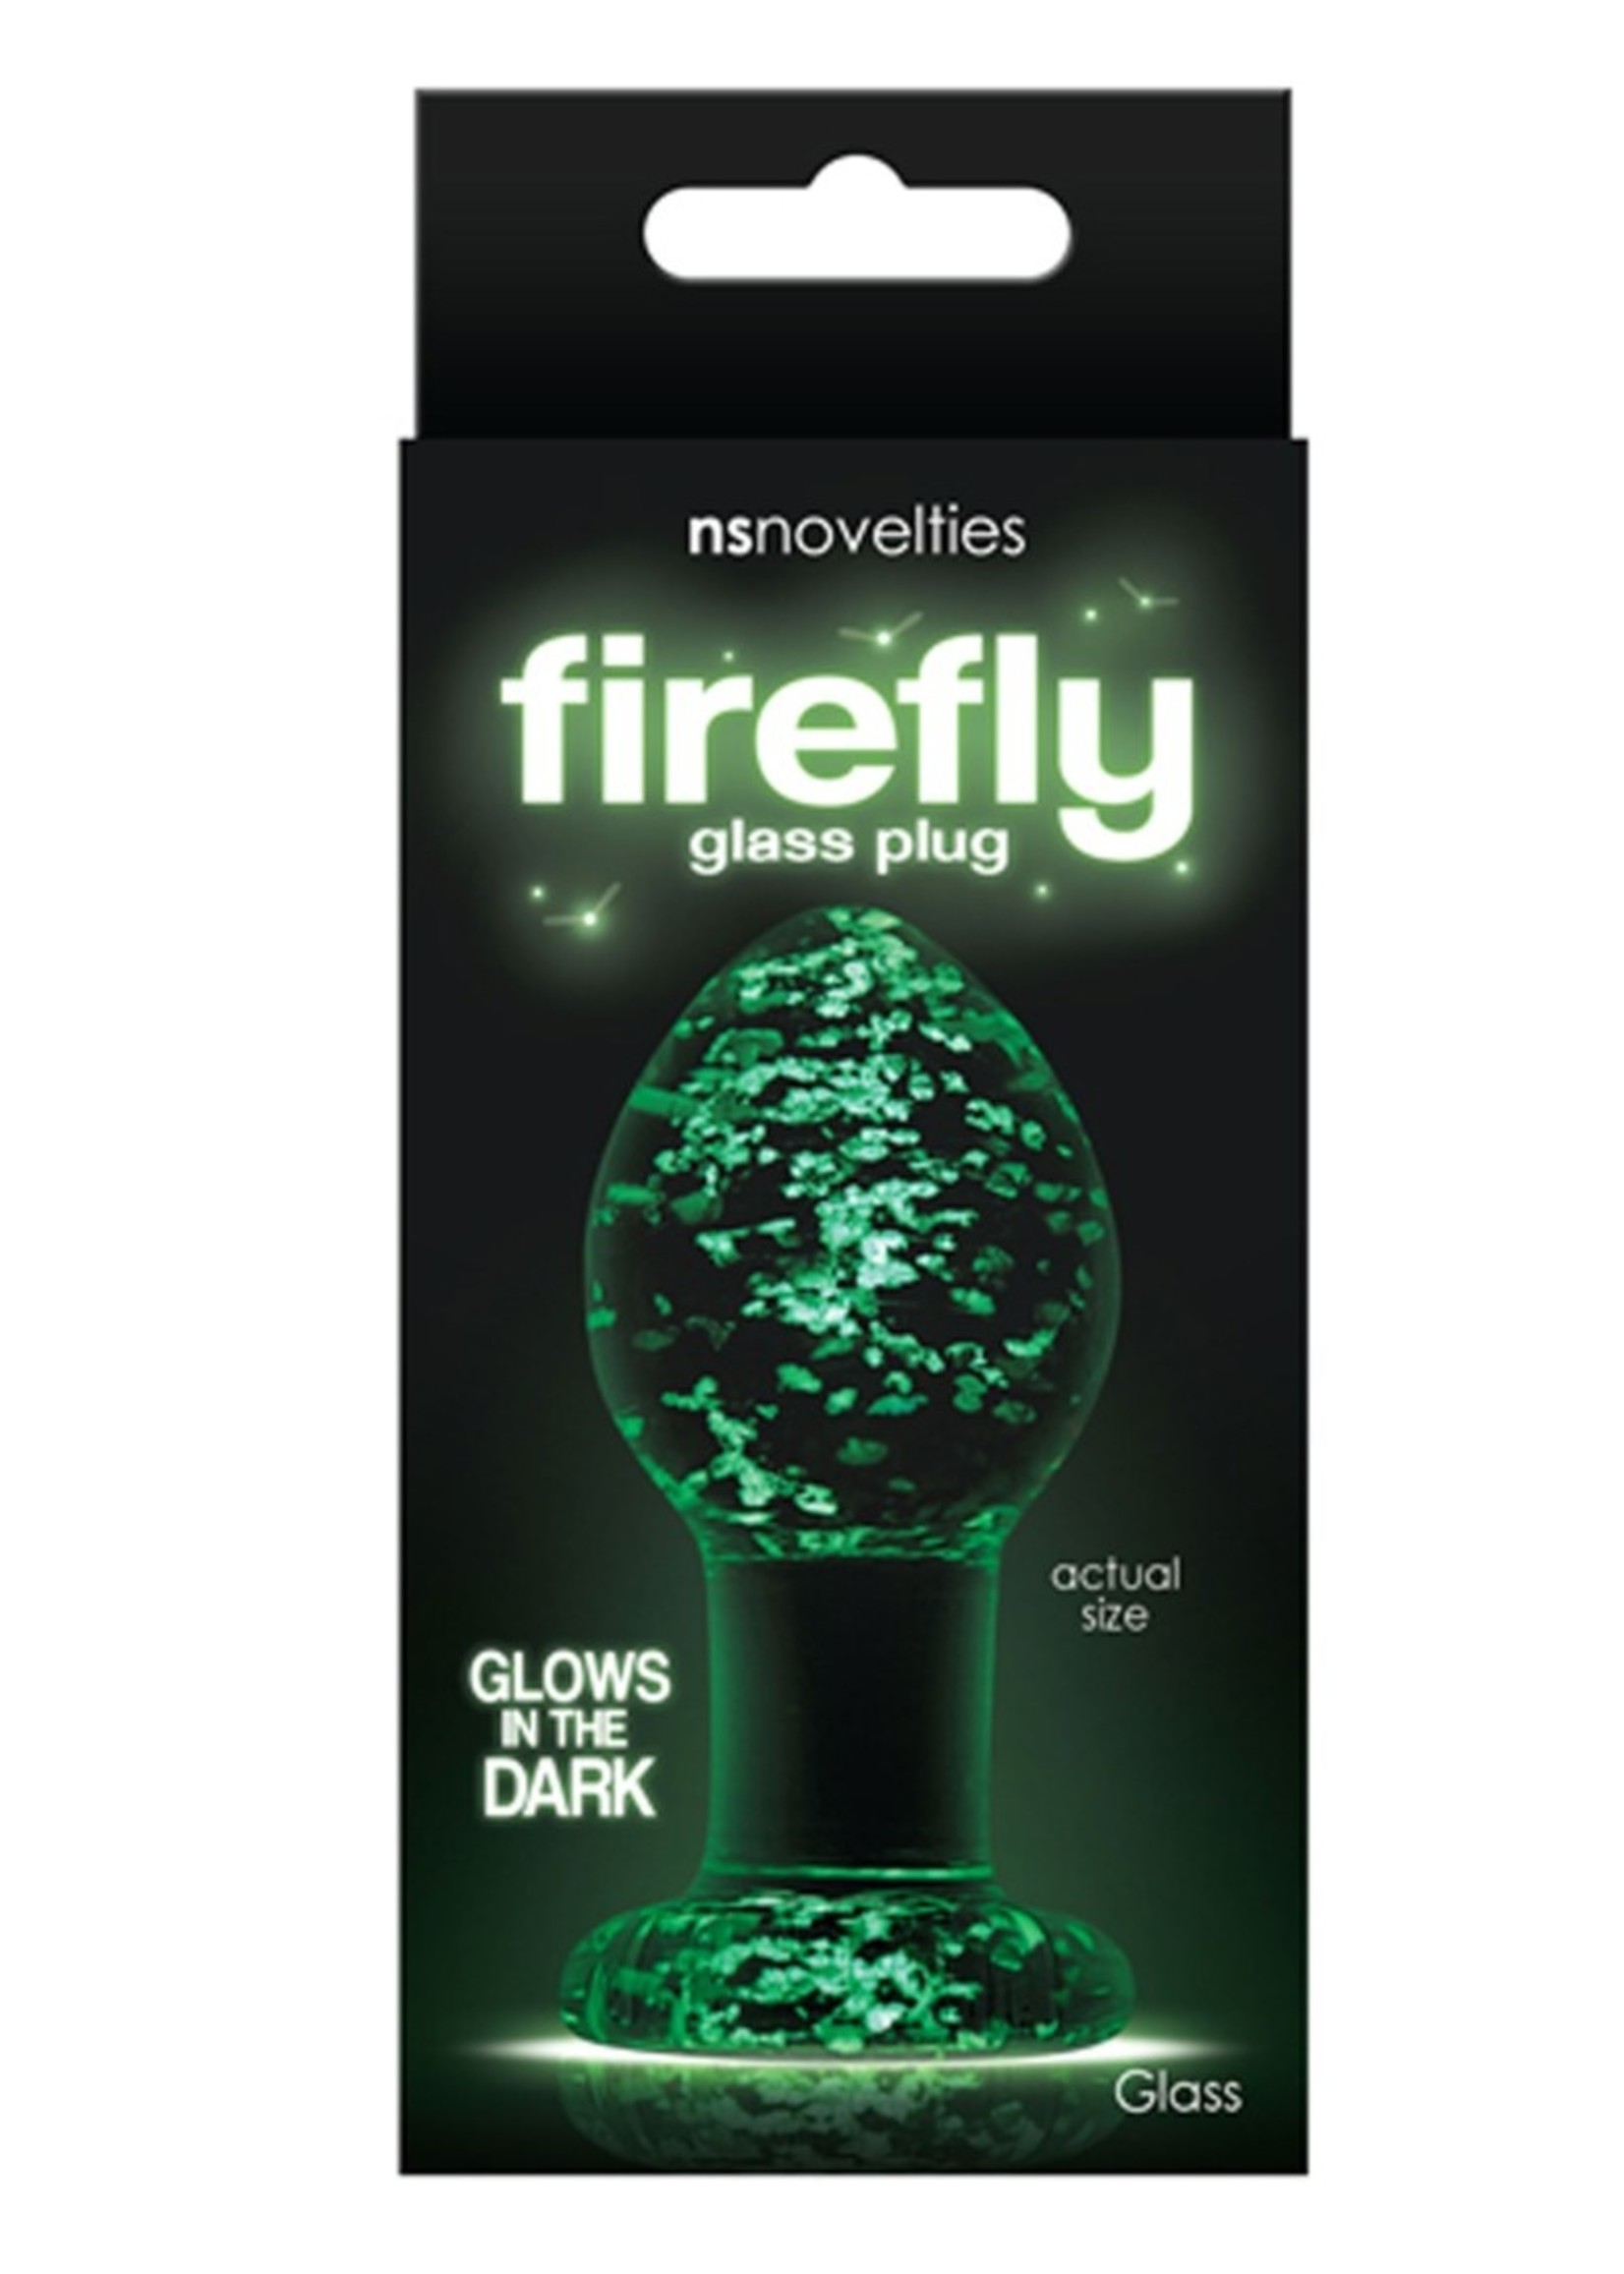 NS Novelties Firefly glass plug - M